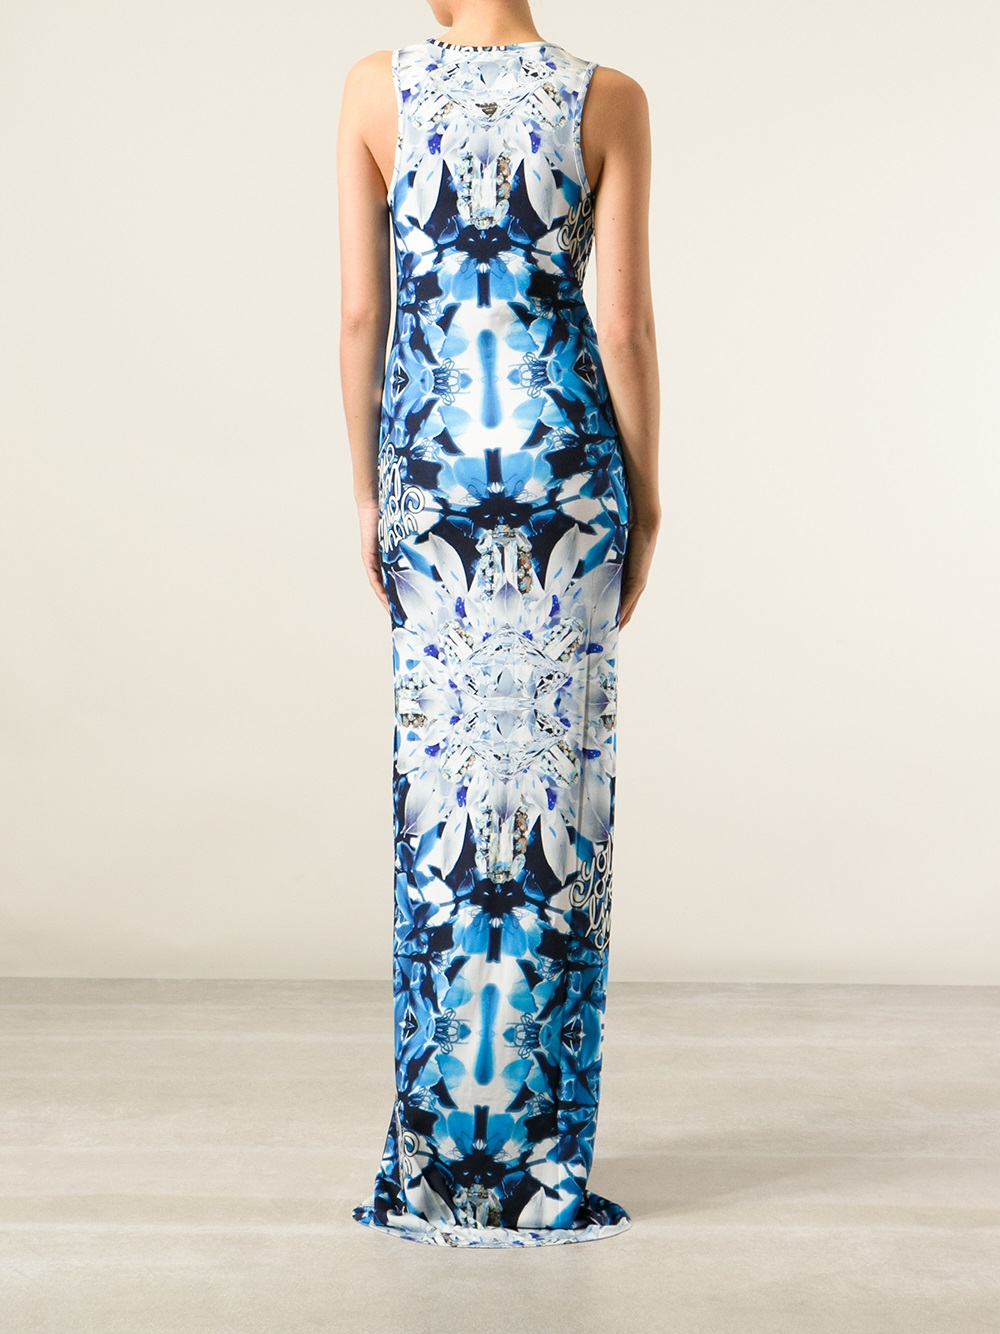 Lyst - Philipp Plein Floral and Crystal Print Maxi Dress